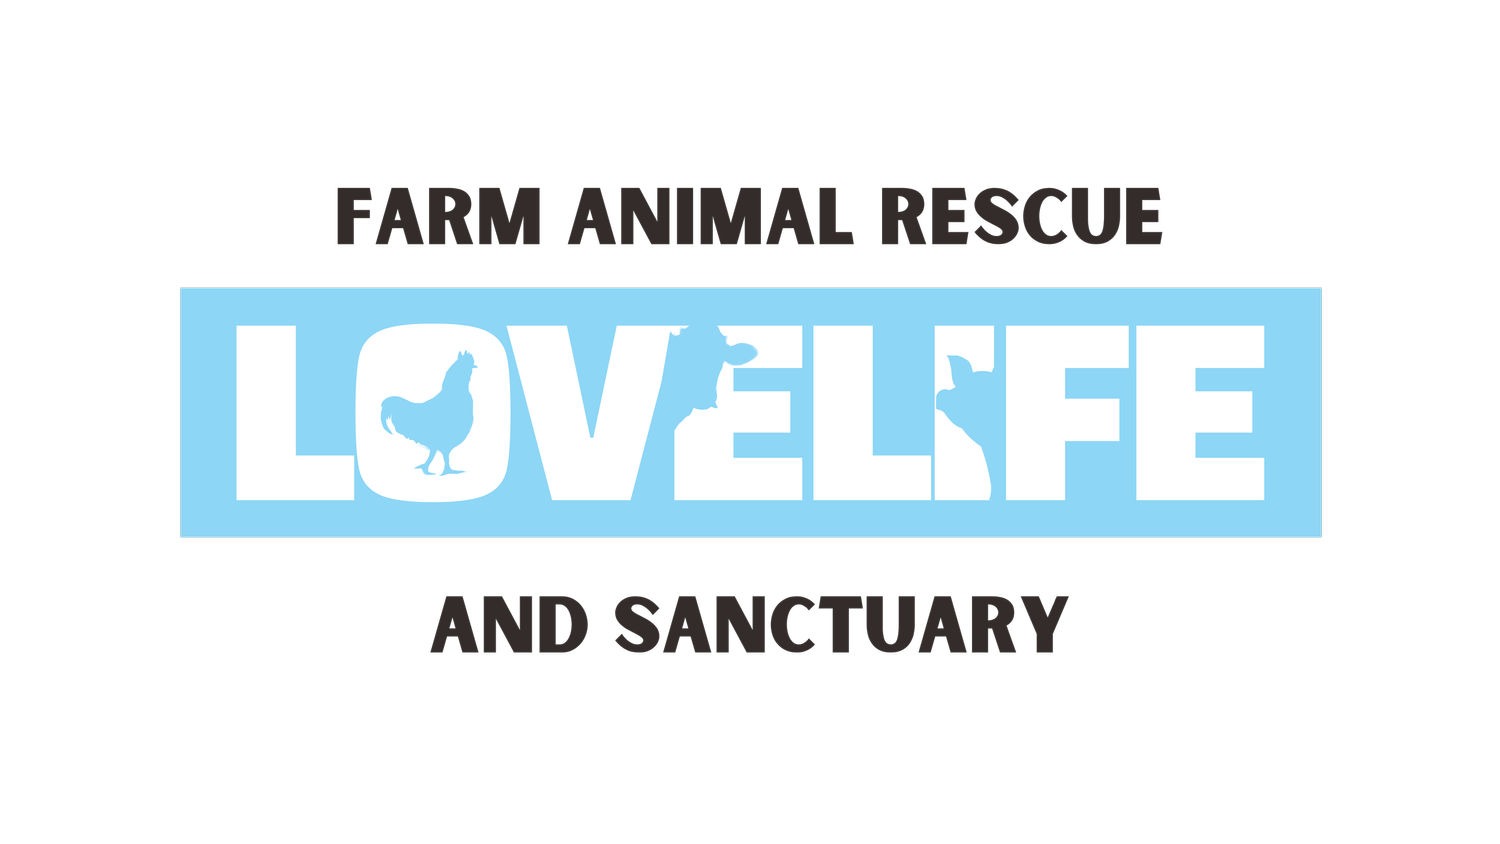 https://images.squarespace-cdn.com/content/v1/645d75f48f9a553de98505f0/f0e05ea4-8c2c-4016-abf1-b1906e1004a0/Love+life+animal+rescue+and+sanctuary.png?format=1500w